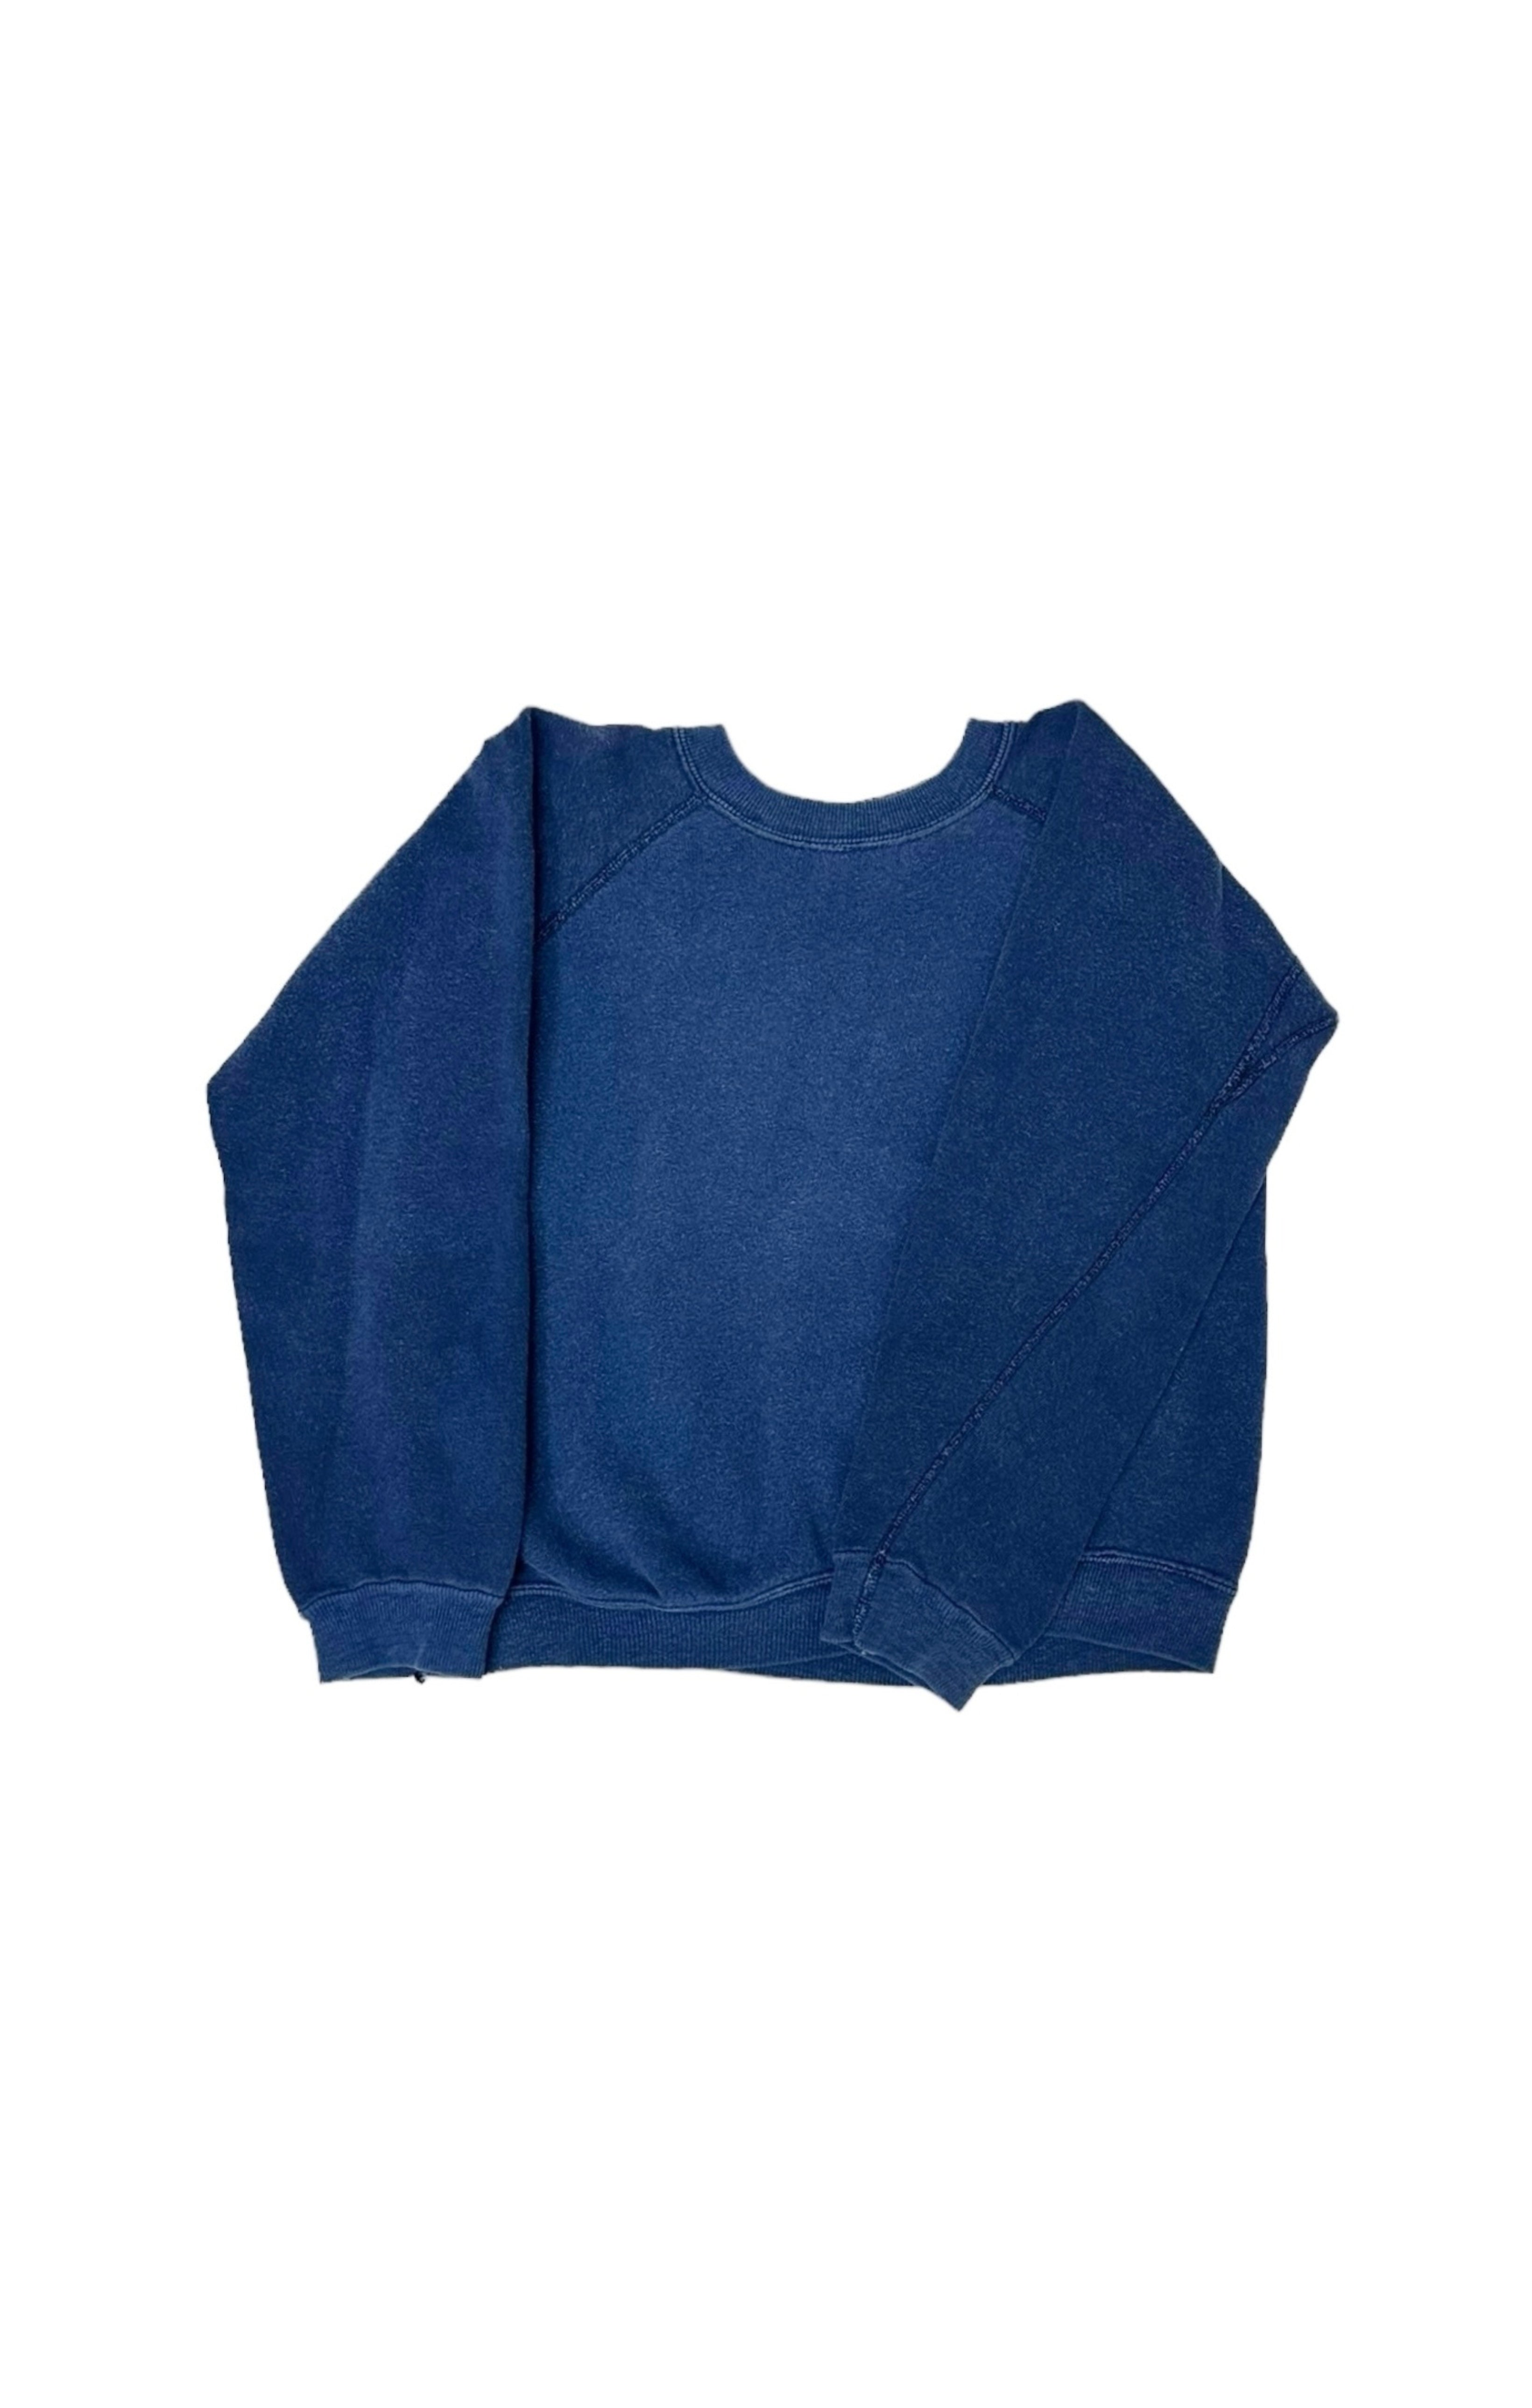 VINTAGE VELVA SHEEN Sweatshirt Size: Marked Youth L / Fits like 8-9 Years